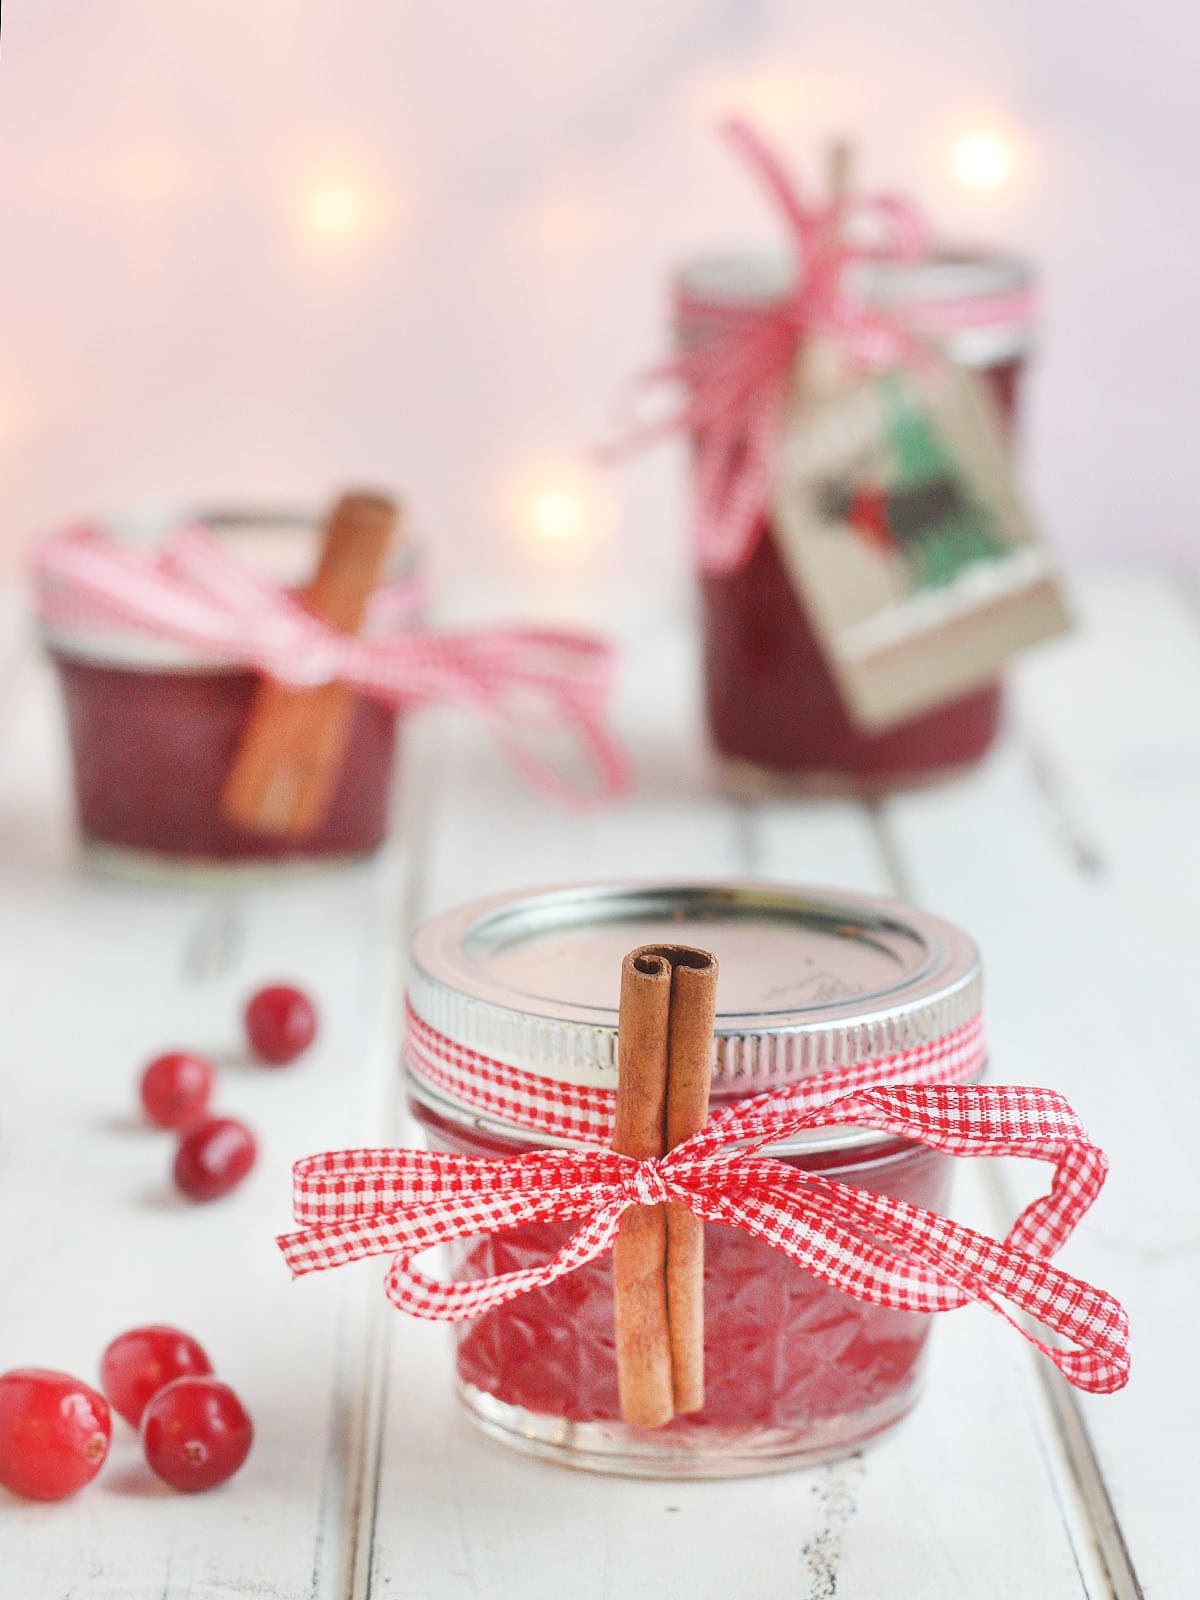 Jars of Christmas Jam garnished with red ribbon and cinnamon sticks.